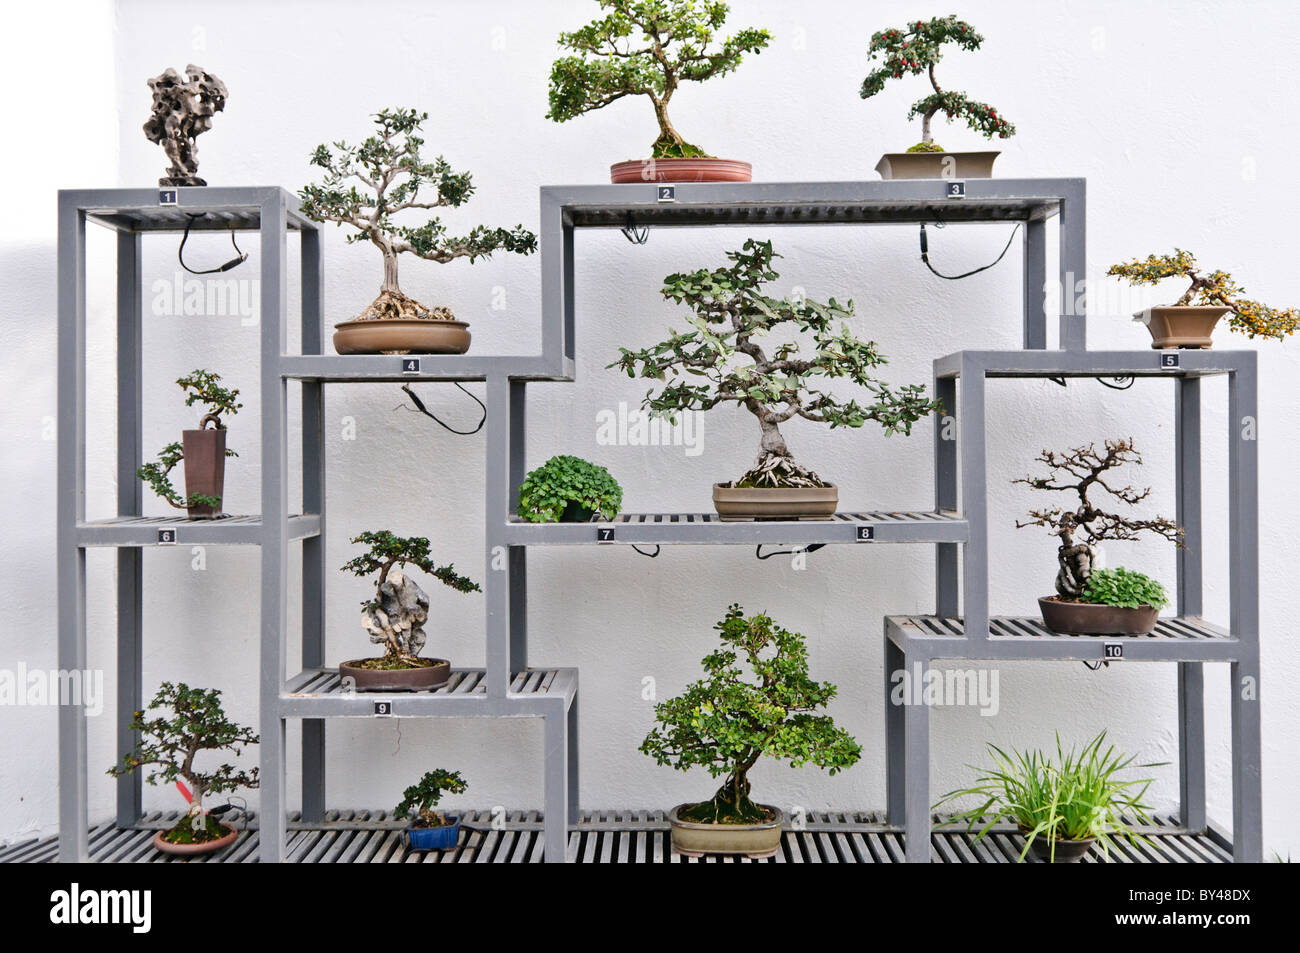 Montreal botanical garden bonsai hi-res stock photography and images - Alamy